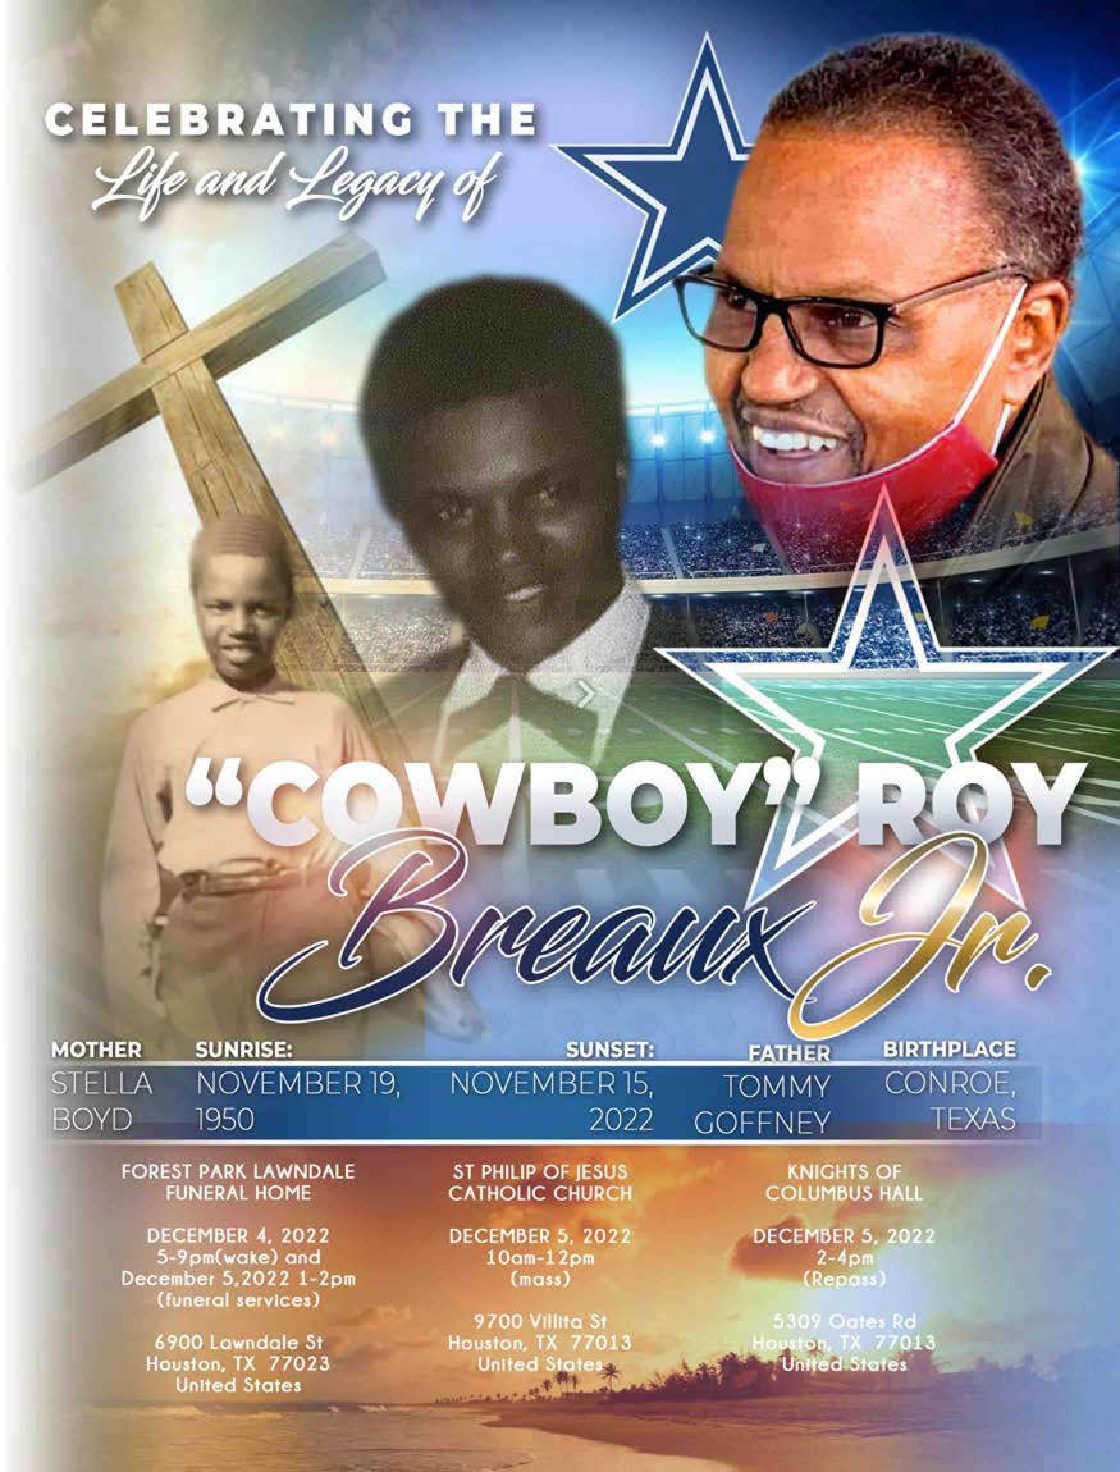 “COWBOY” ROY BREAUX JR. 1950 – 2022